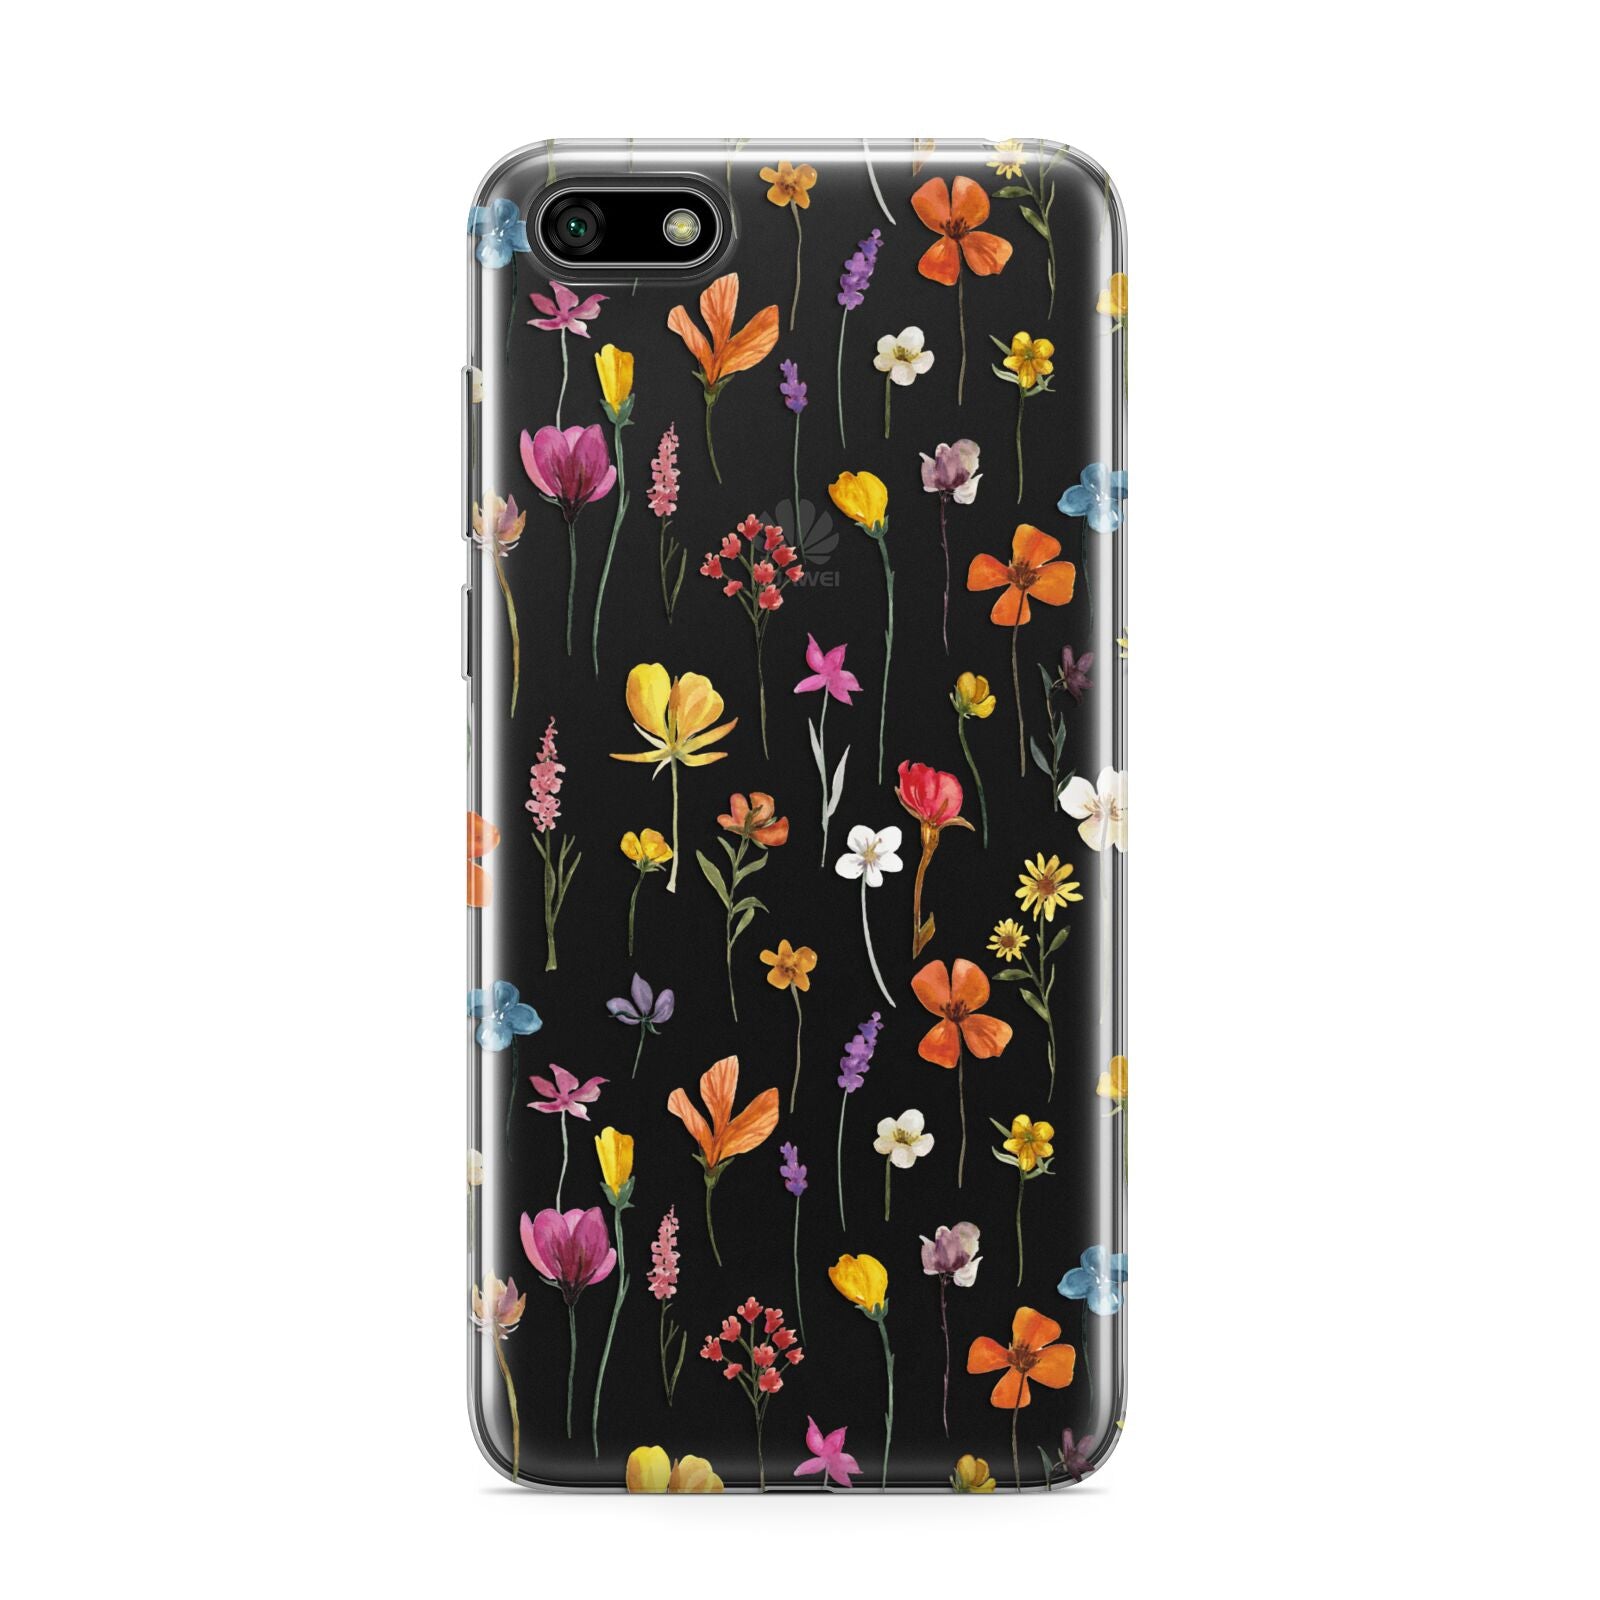 Botanical Floral Huawei Y5 Prime 2018 Phone Case